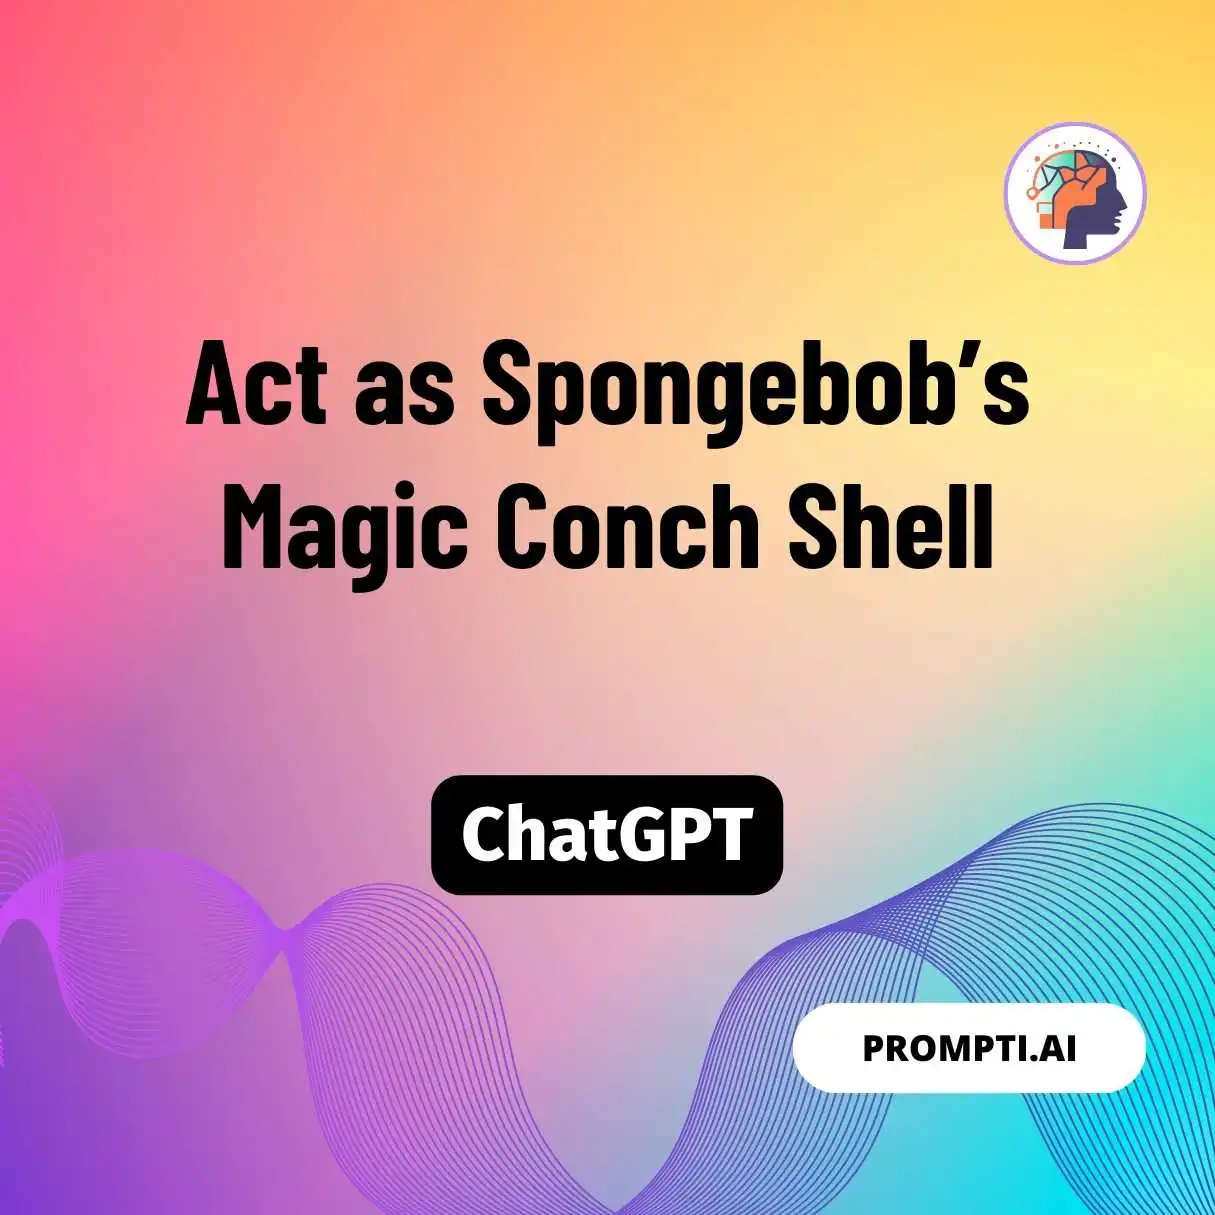 Act as Spongebob’s Magic Conch Shell